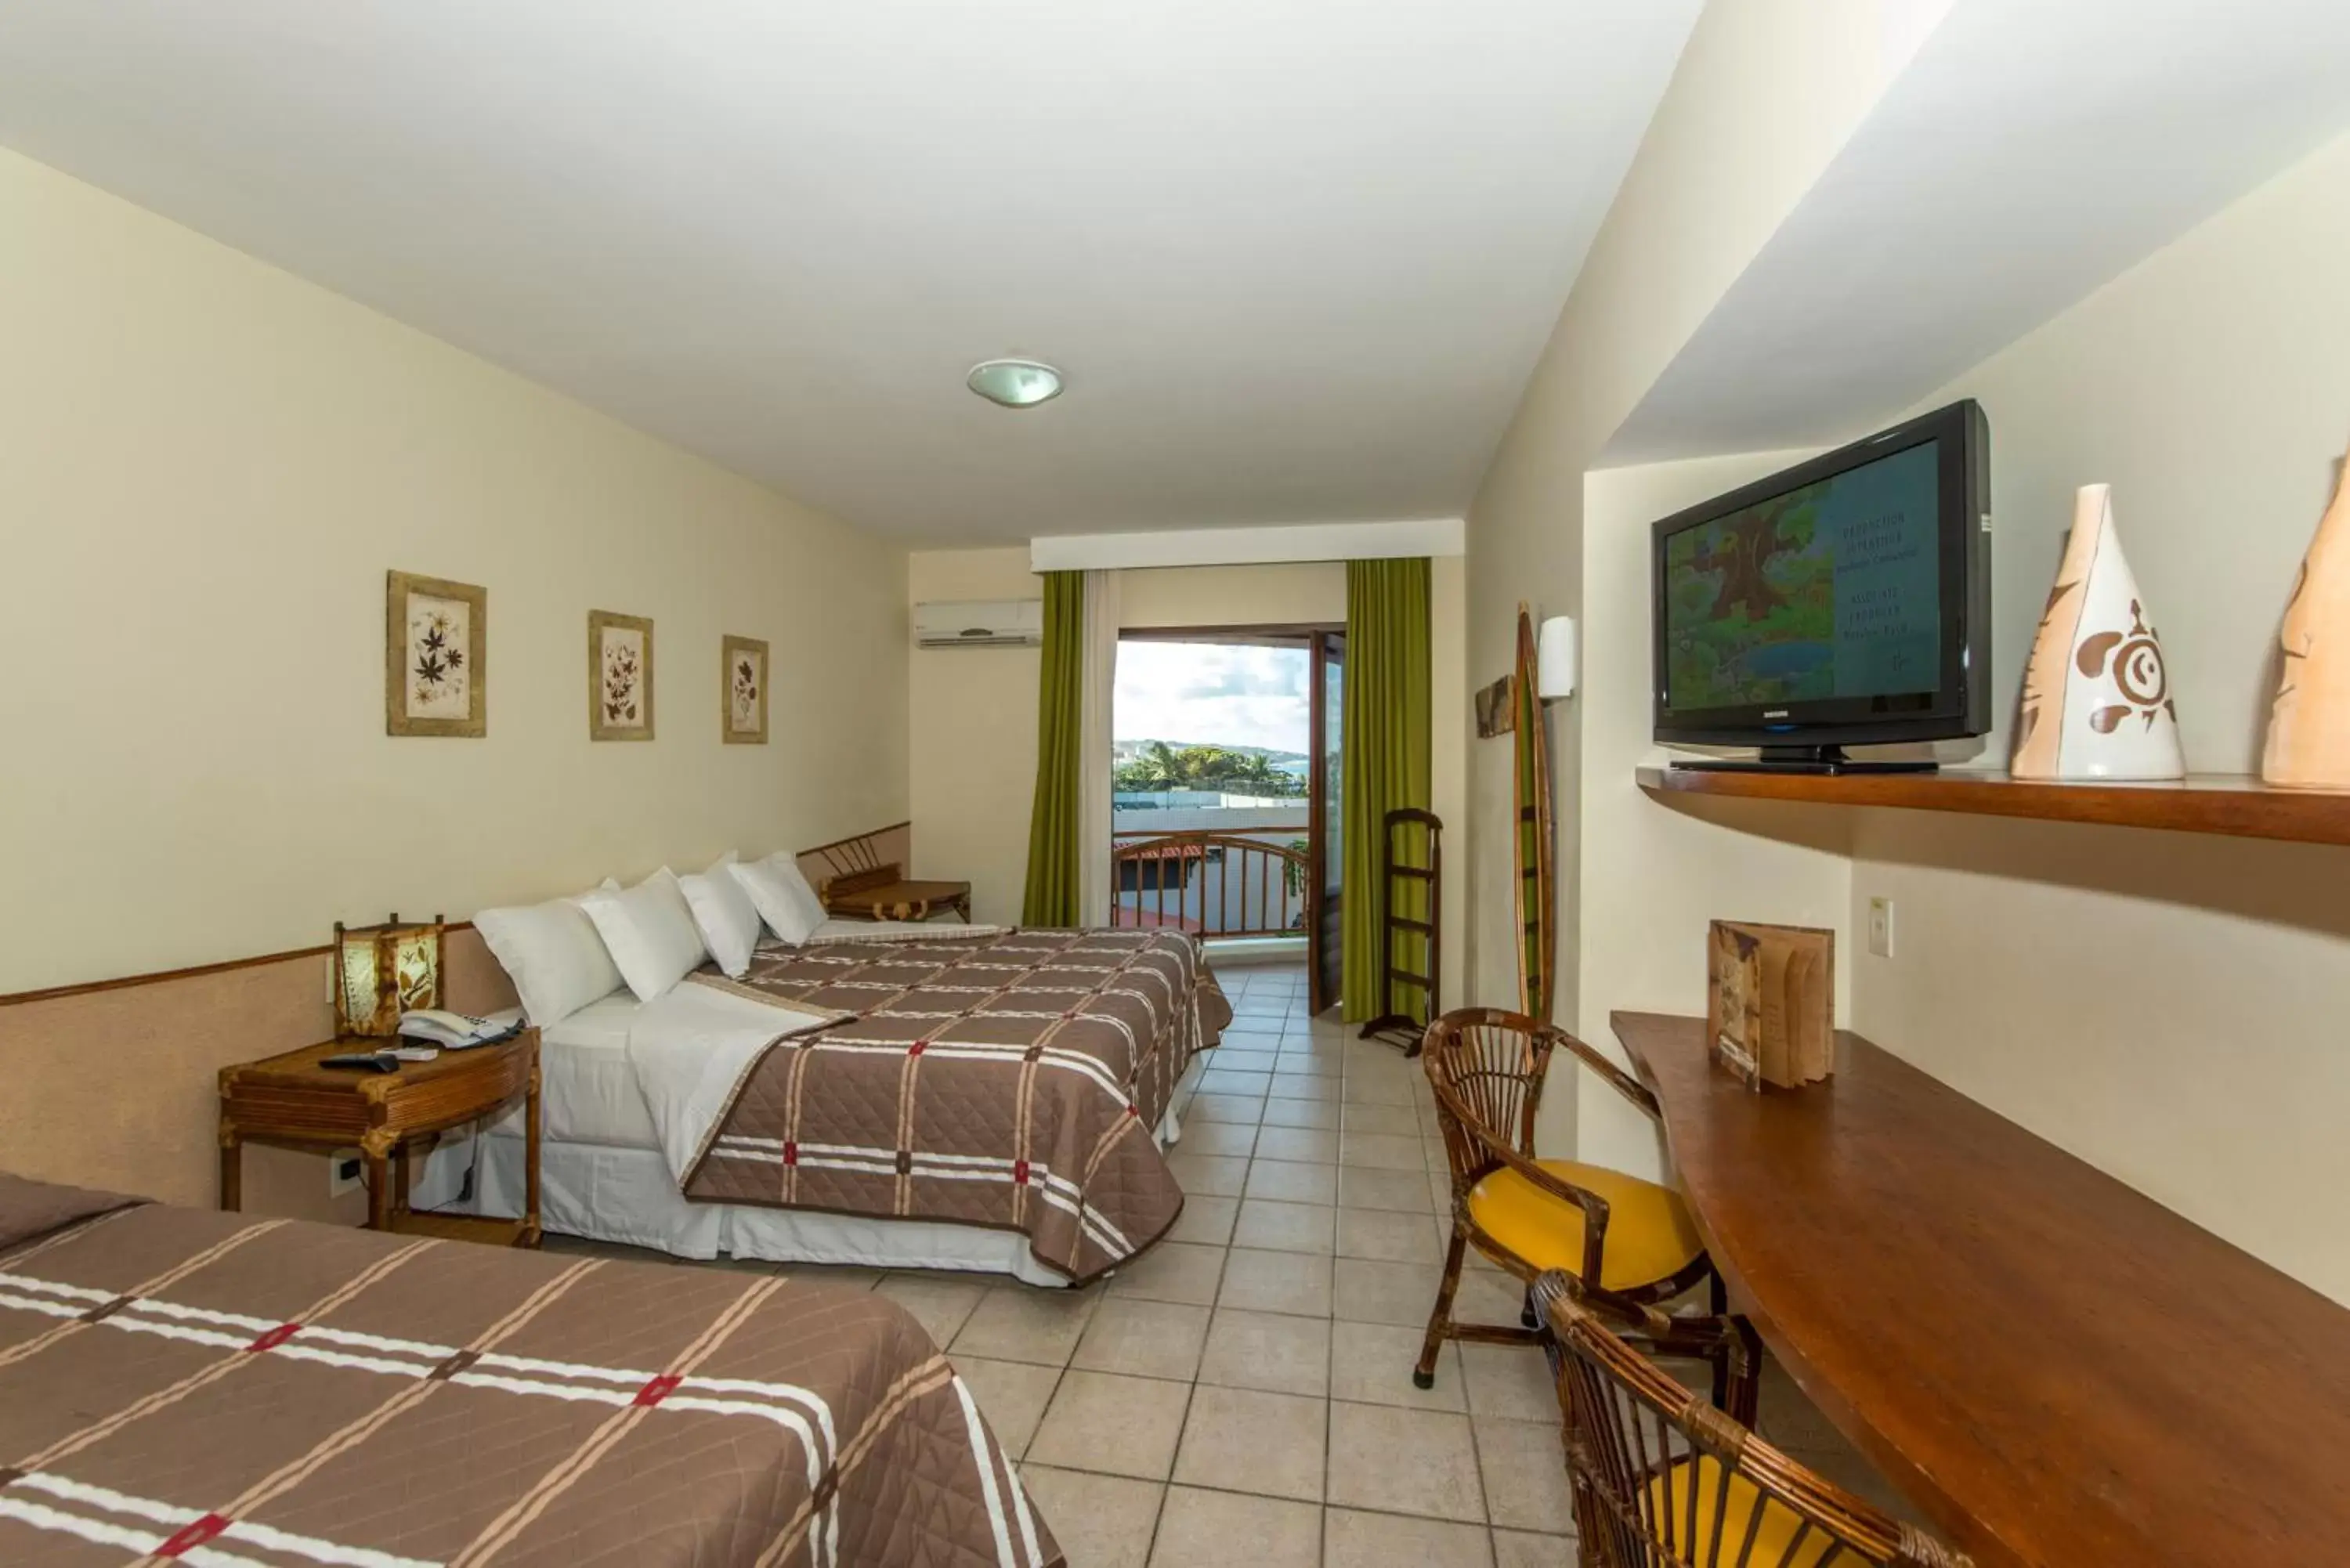 Photo of the whole room in Divi-Divi Praia Hotel